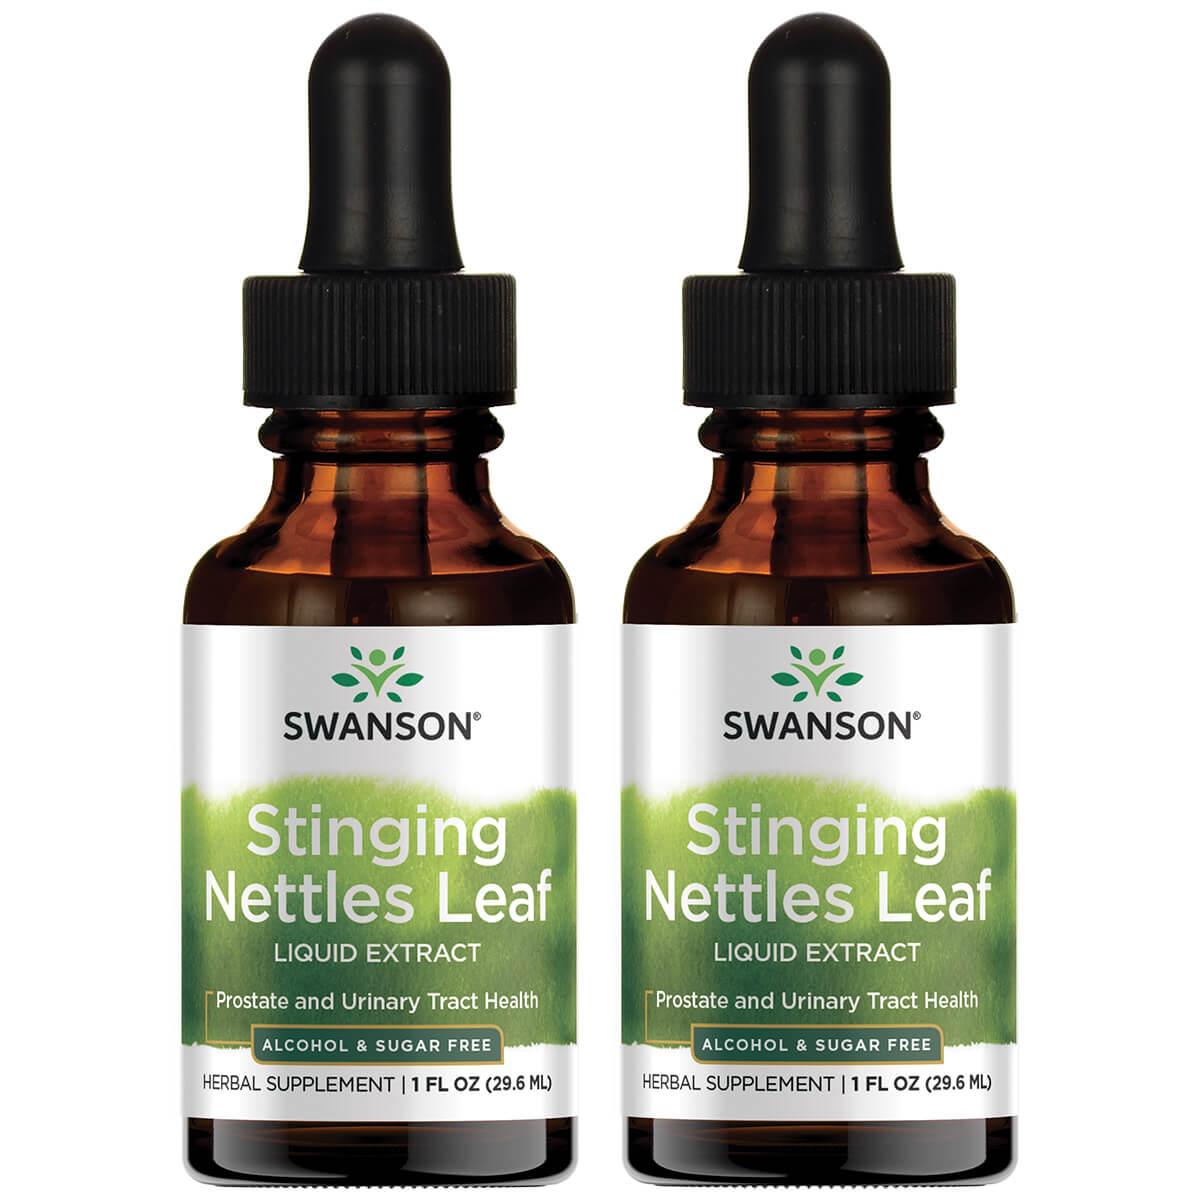 Swanson Premium Stinging Nettles Leaf Liquid Extract - Alcohol & Sugar Free 2 Pack Vitamin 1 G 1 fl oz Liquid Prostate Health